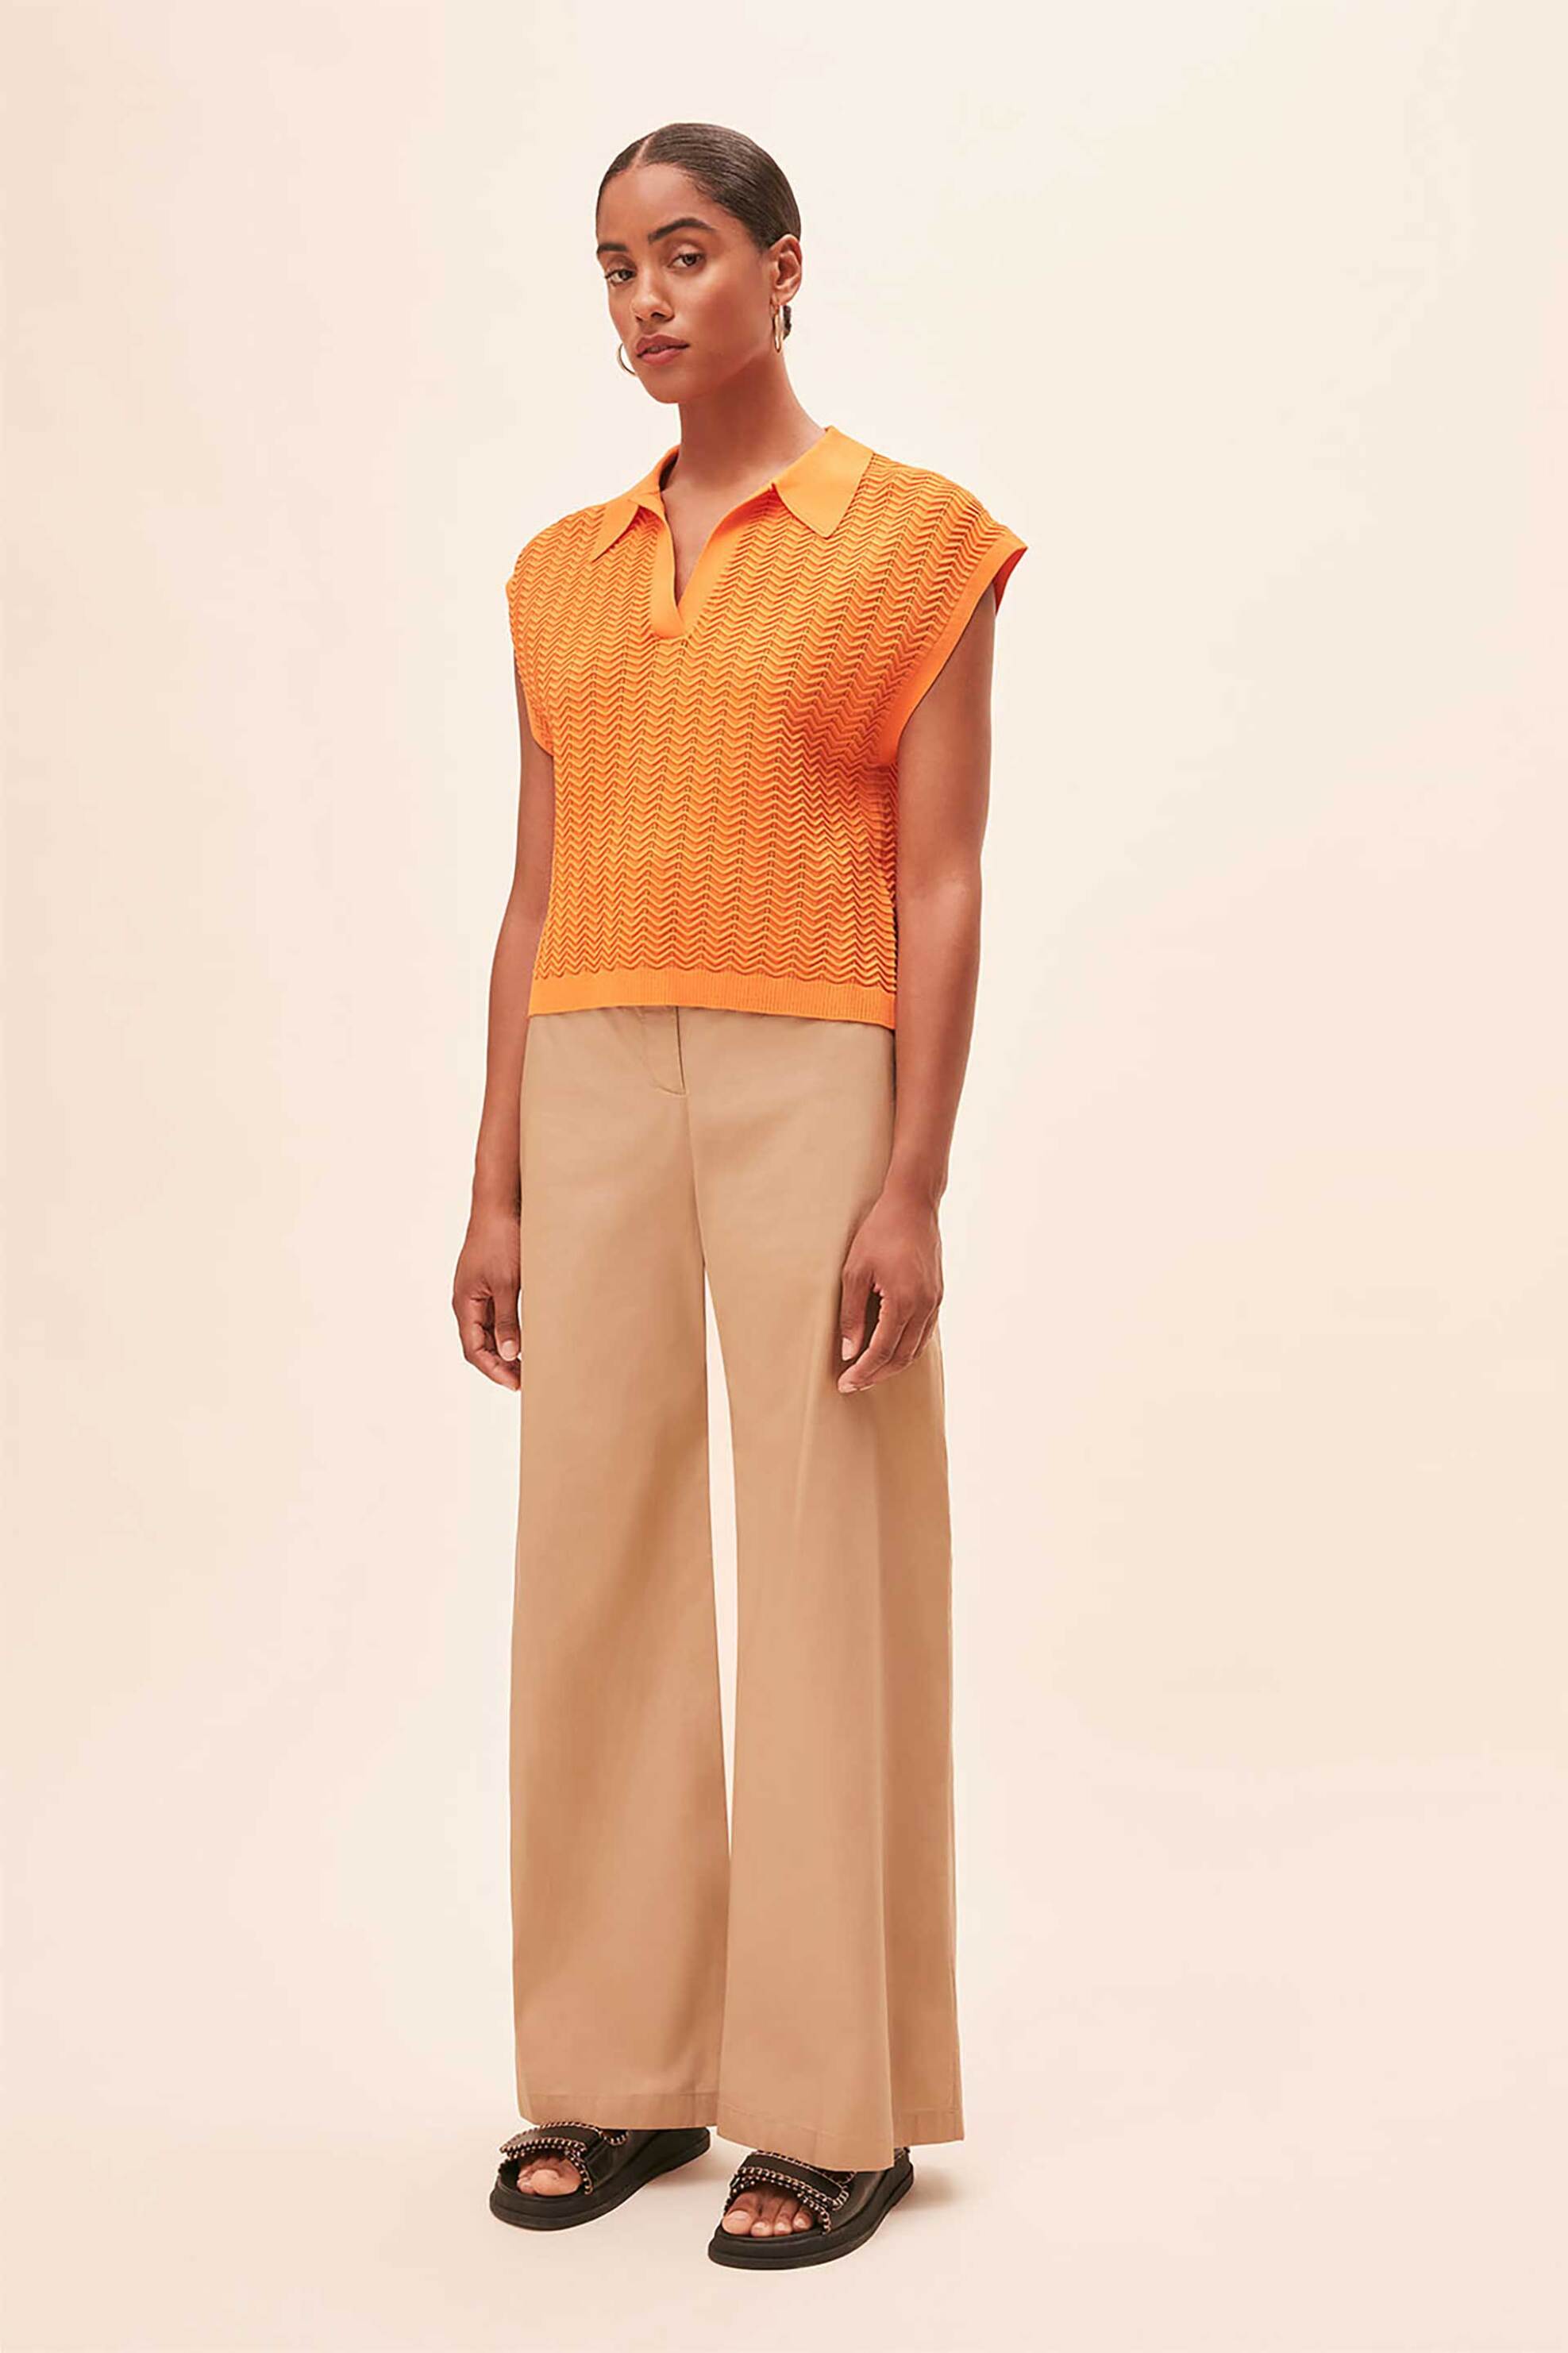 Suncoo γυναικεία μπλούζα πλεκτή με ανάγλυφο σχέδιο "Perikel" - M01337E24 Πορτοκαλί 9-4973000109|EC9453|T2